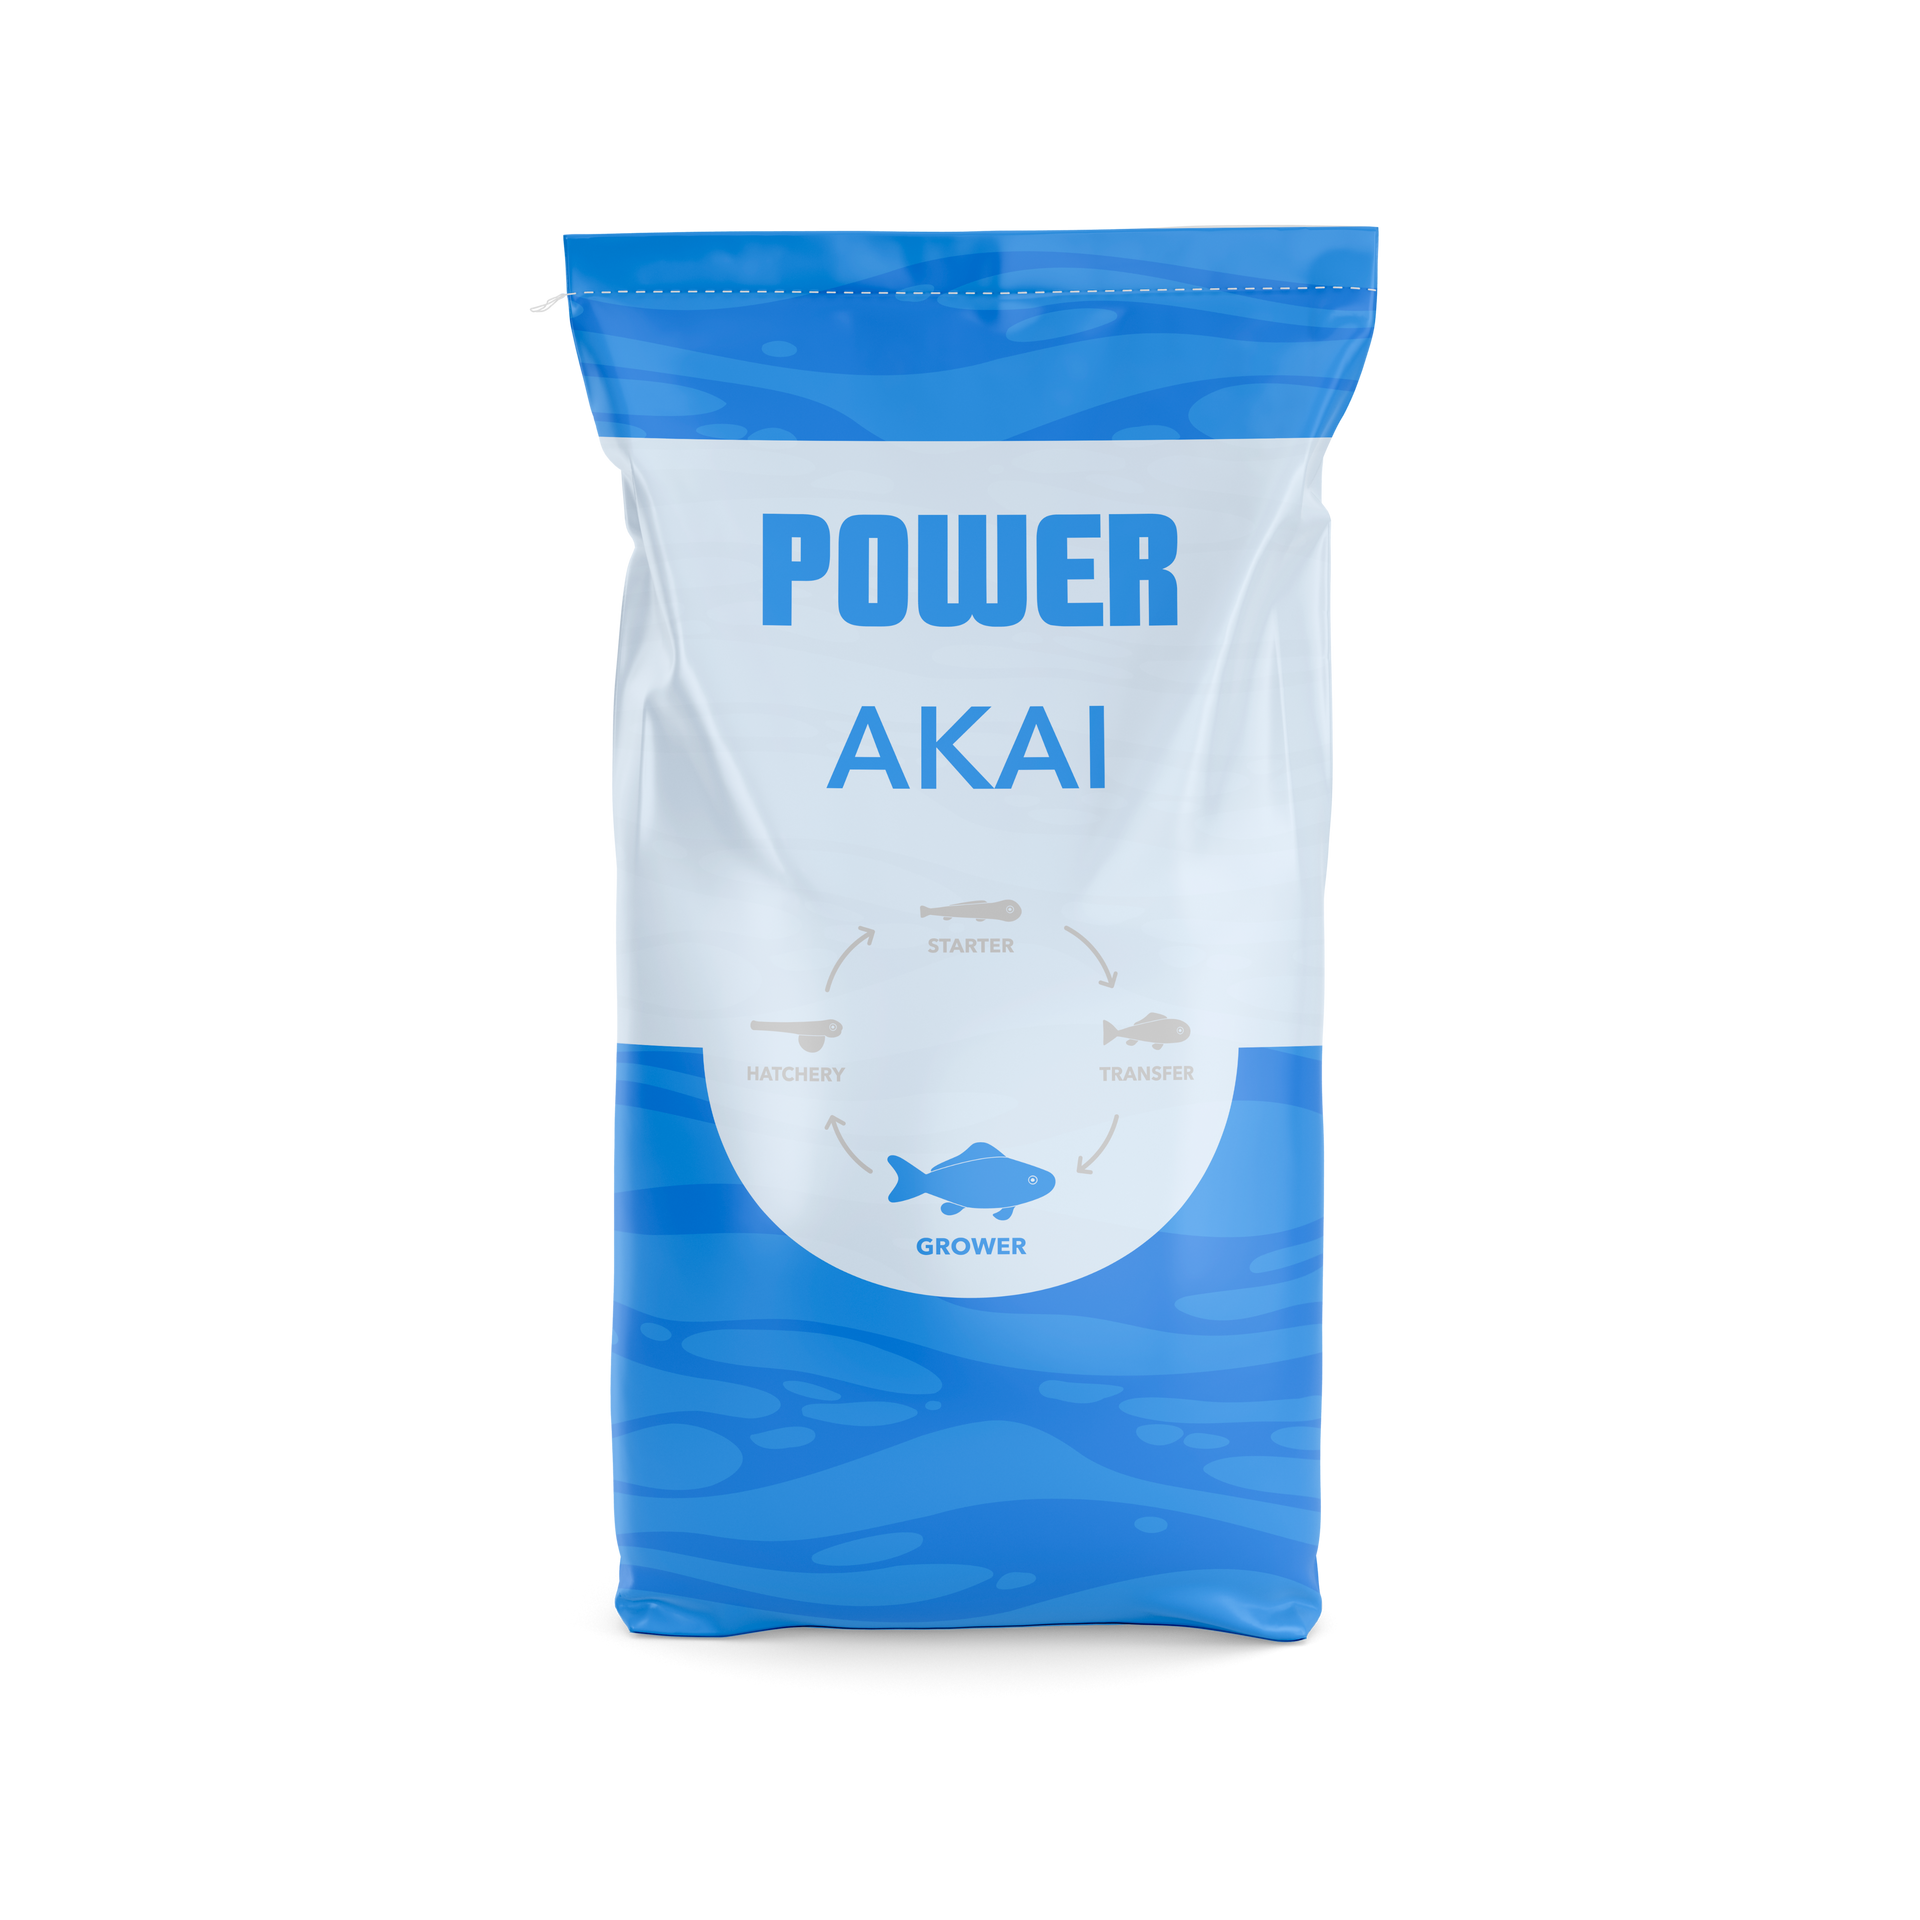 Power Akai high performance feed for coho salmon